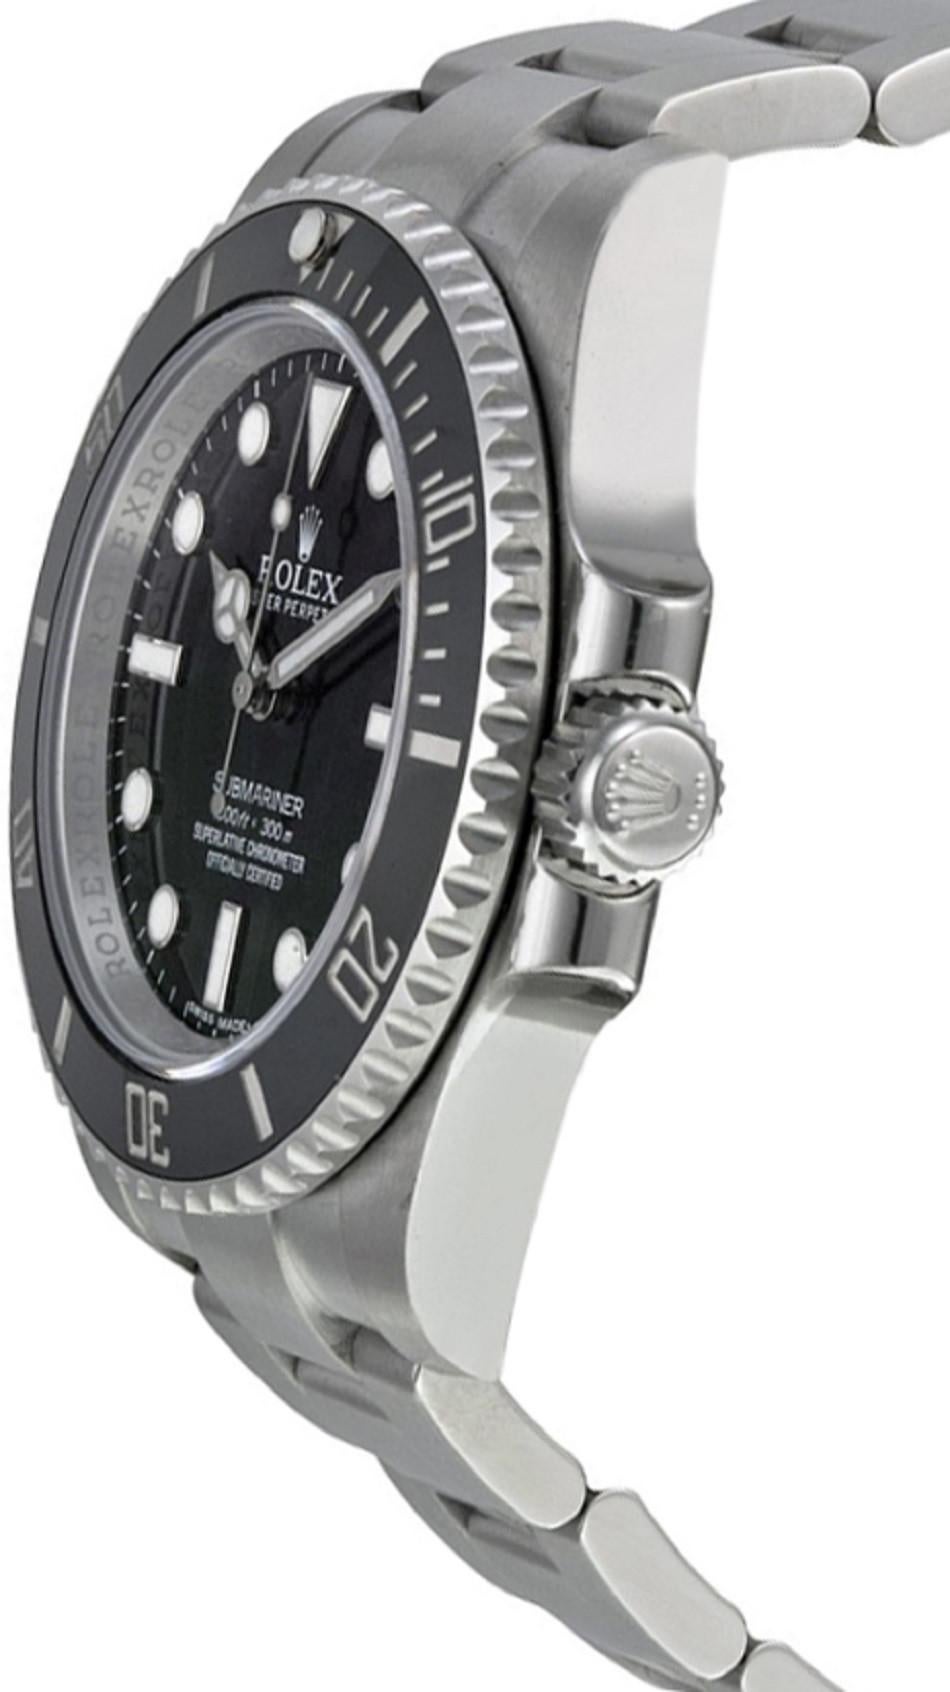 Modern Rolex Submariner 114060 Ceramic New Condition Automatic Men's Watch